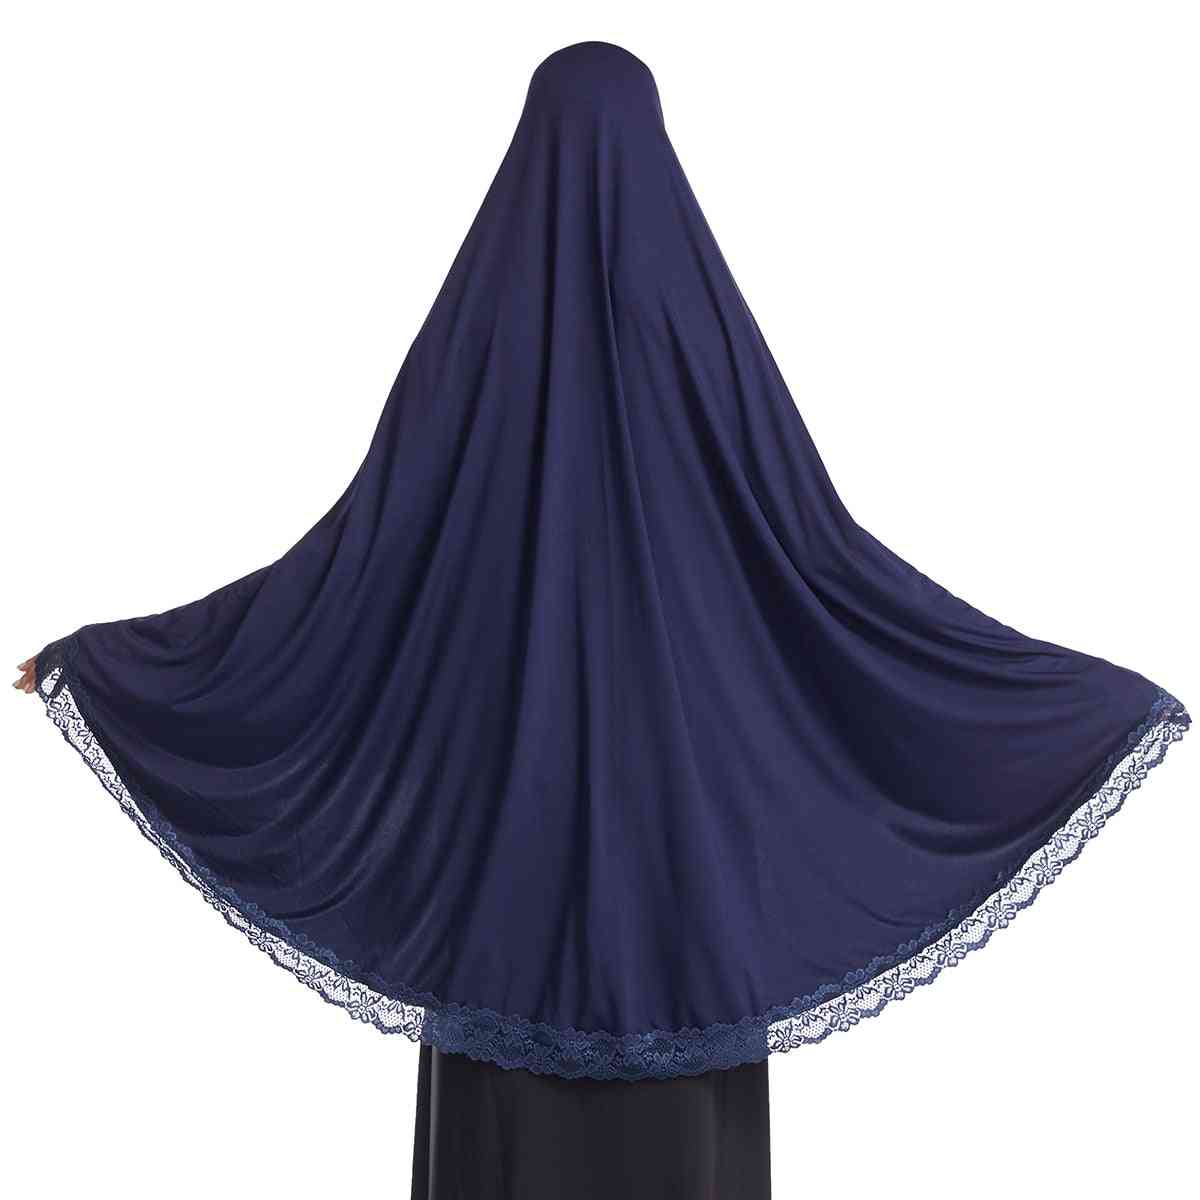 Naiset muslimi rukous pitkä khimar lace trim hunnut headcover hijab